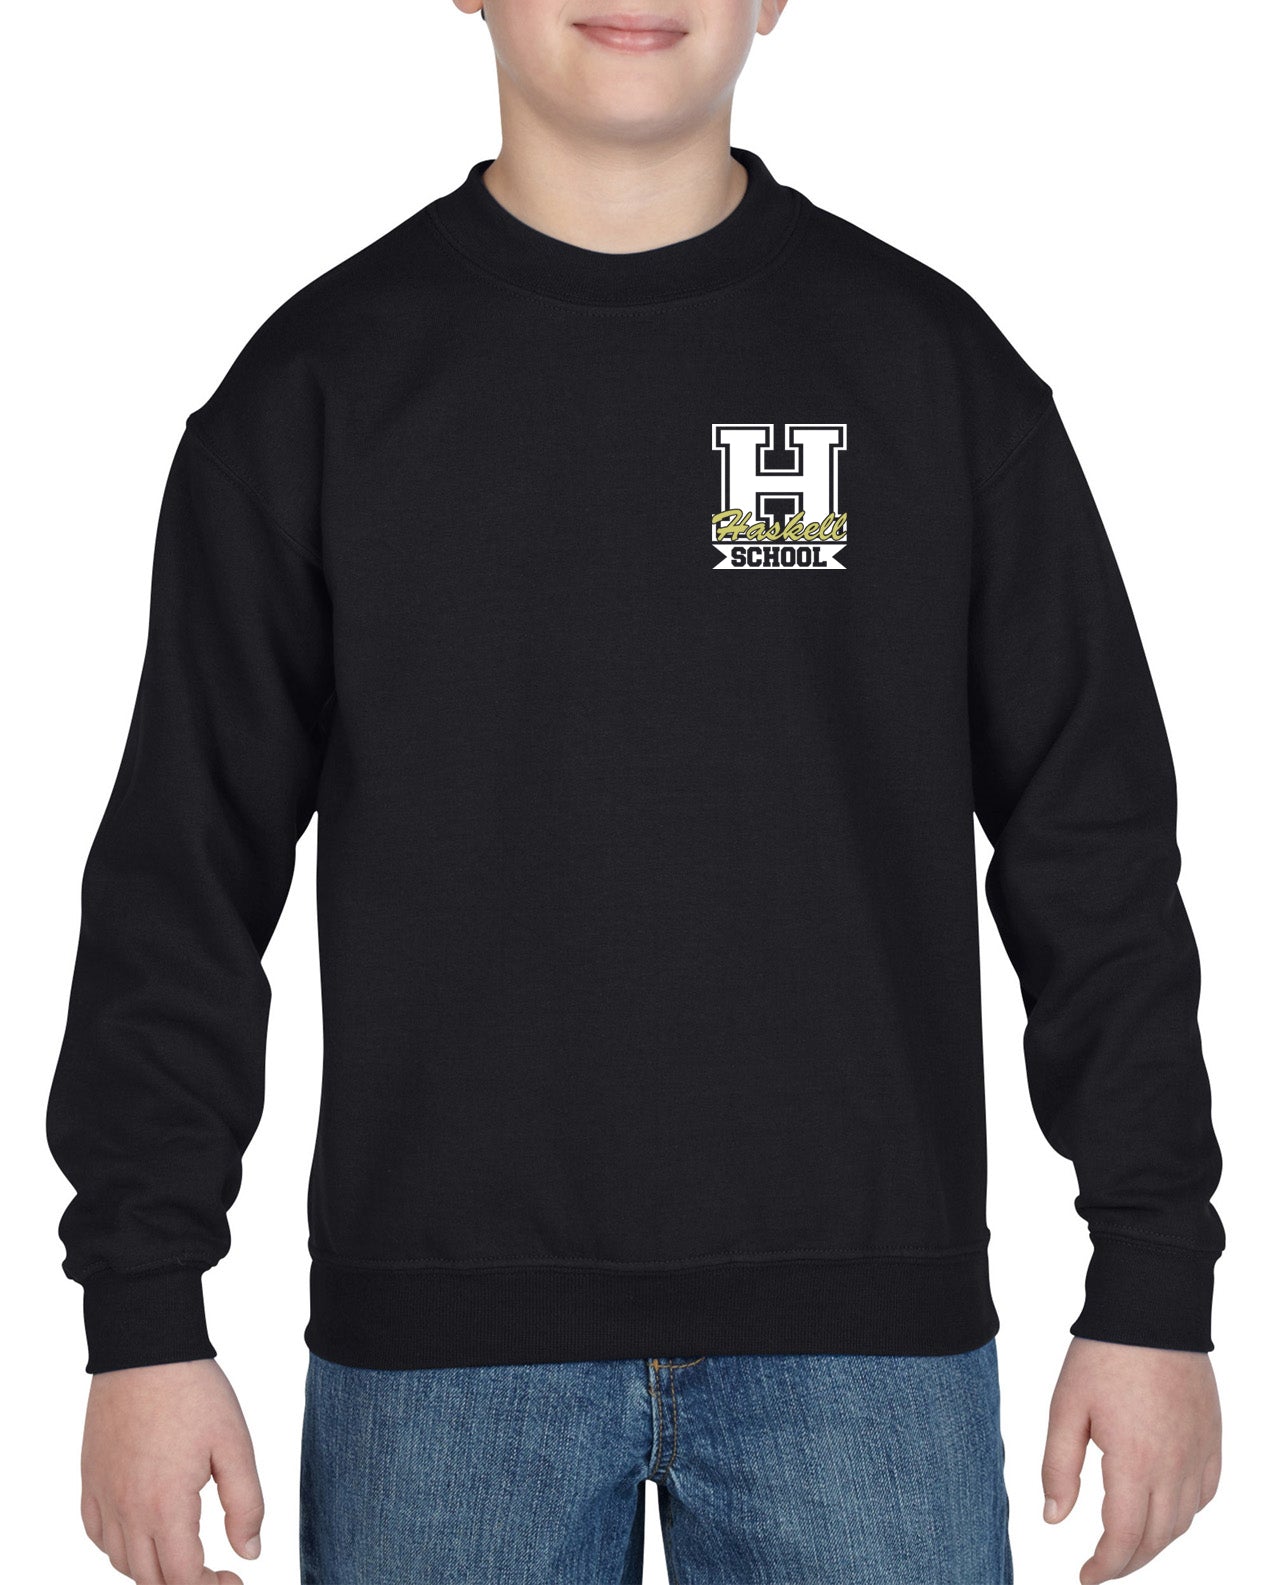 haskell school black heavy blend crewneck sweatshirt w/ haskell school 